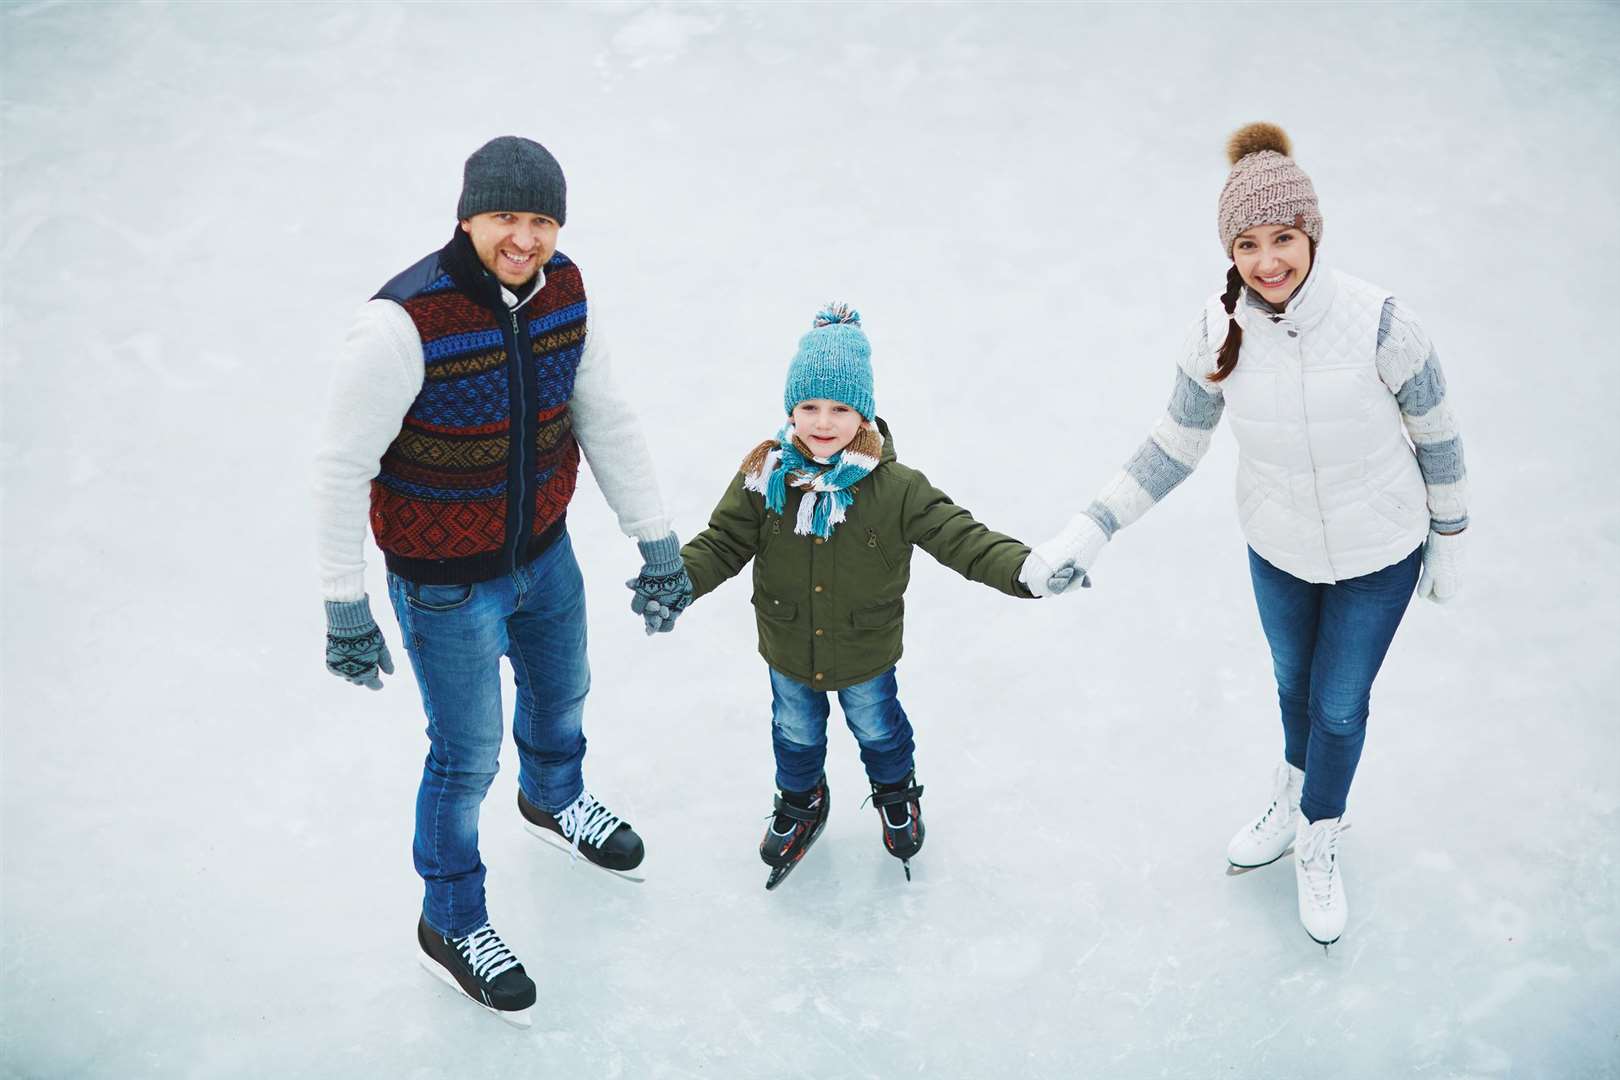 Take the kids ice skating this weekend